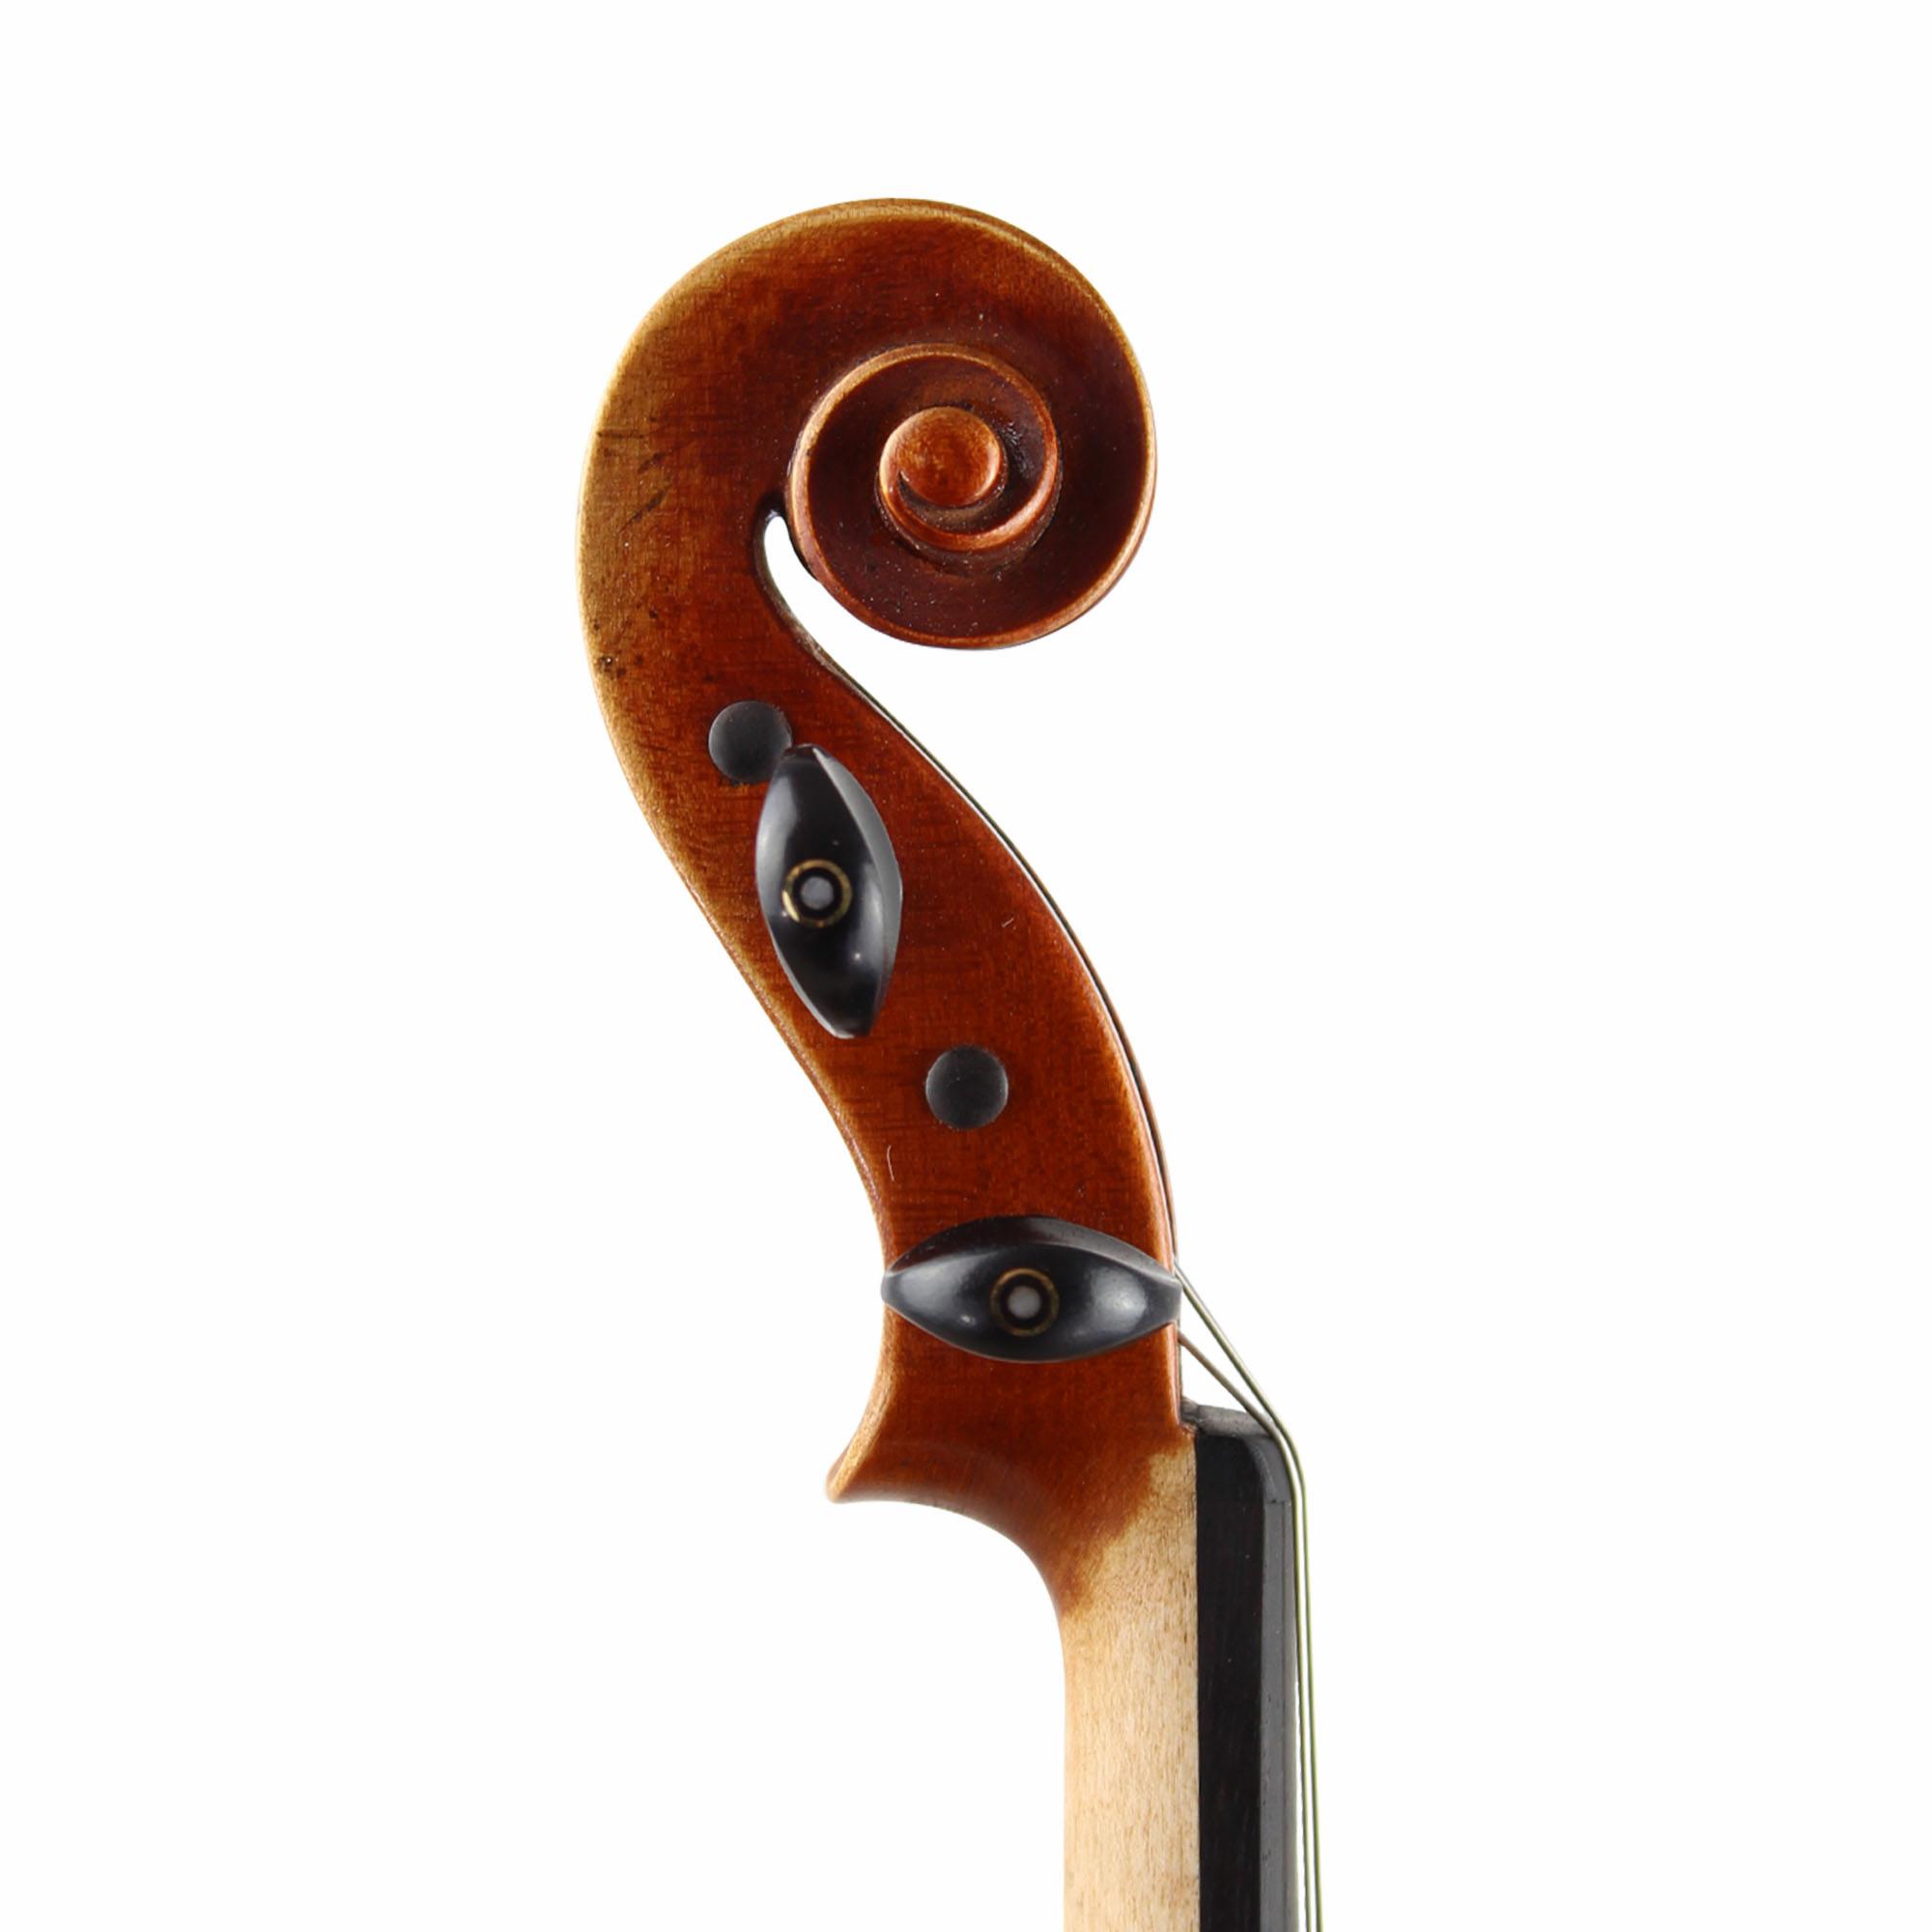 Franz Werner Virtuoso Violin